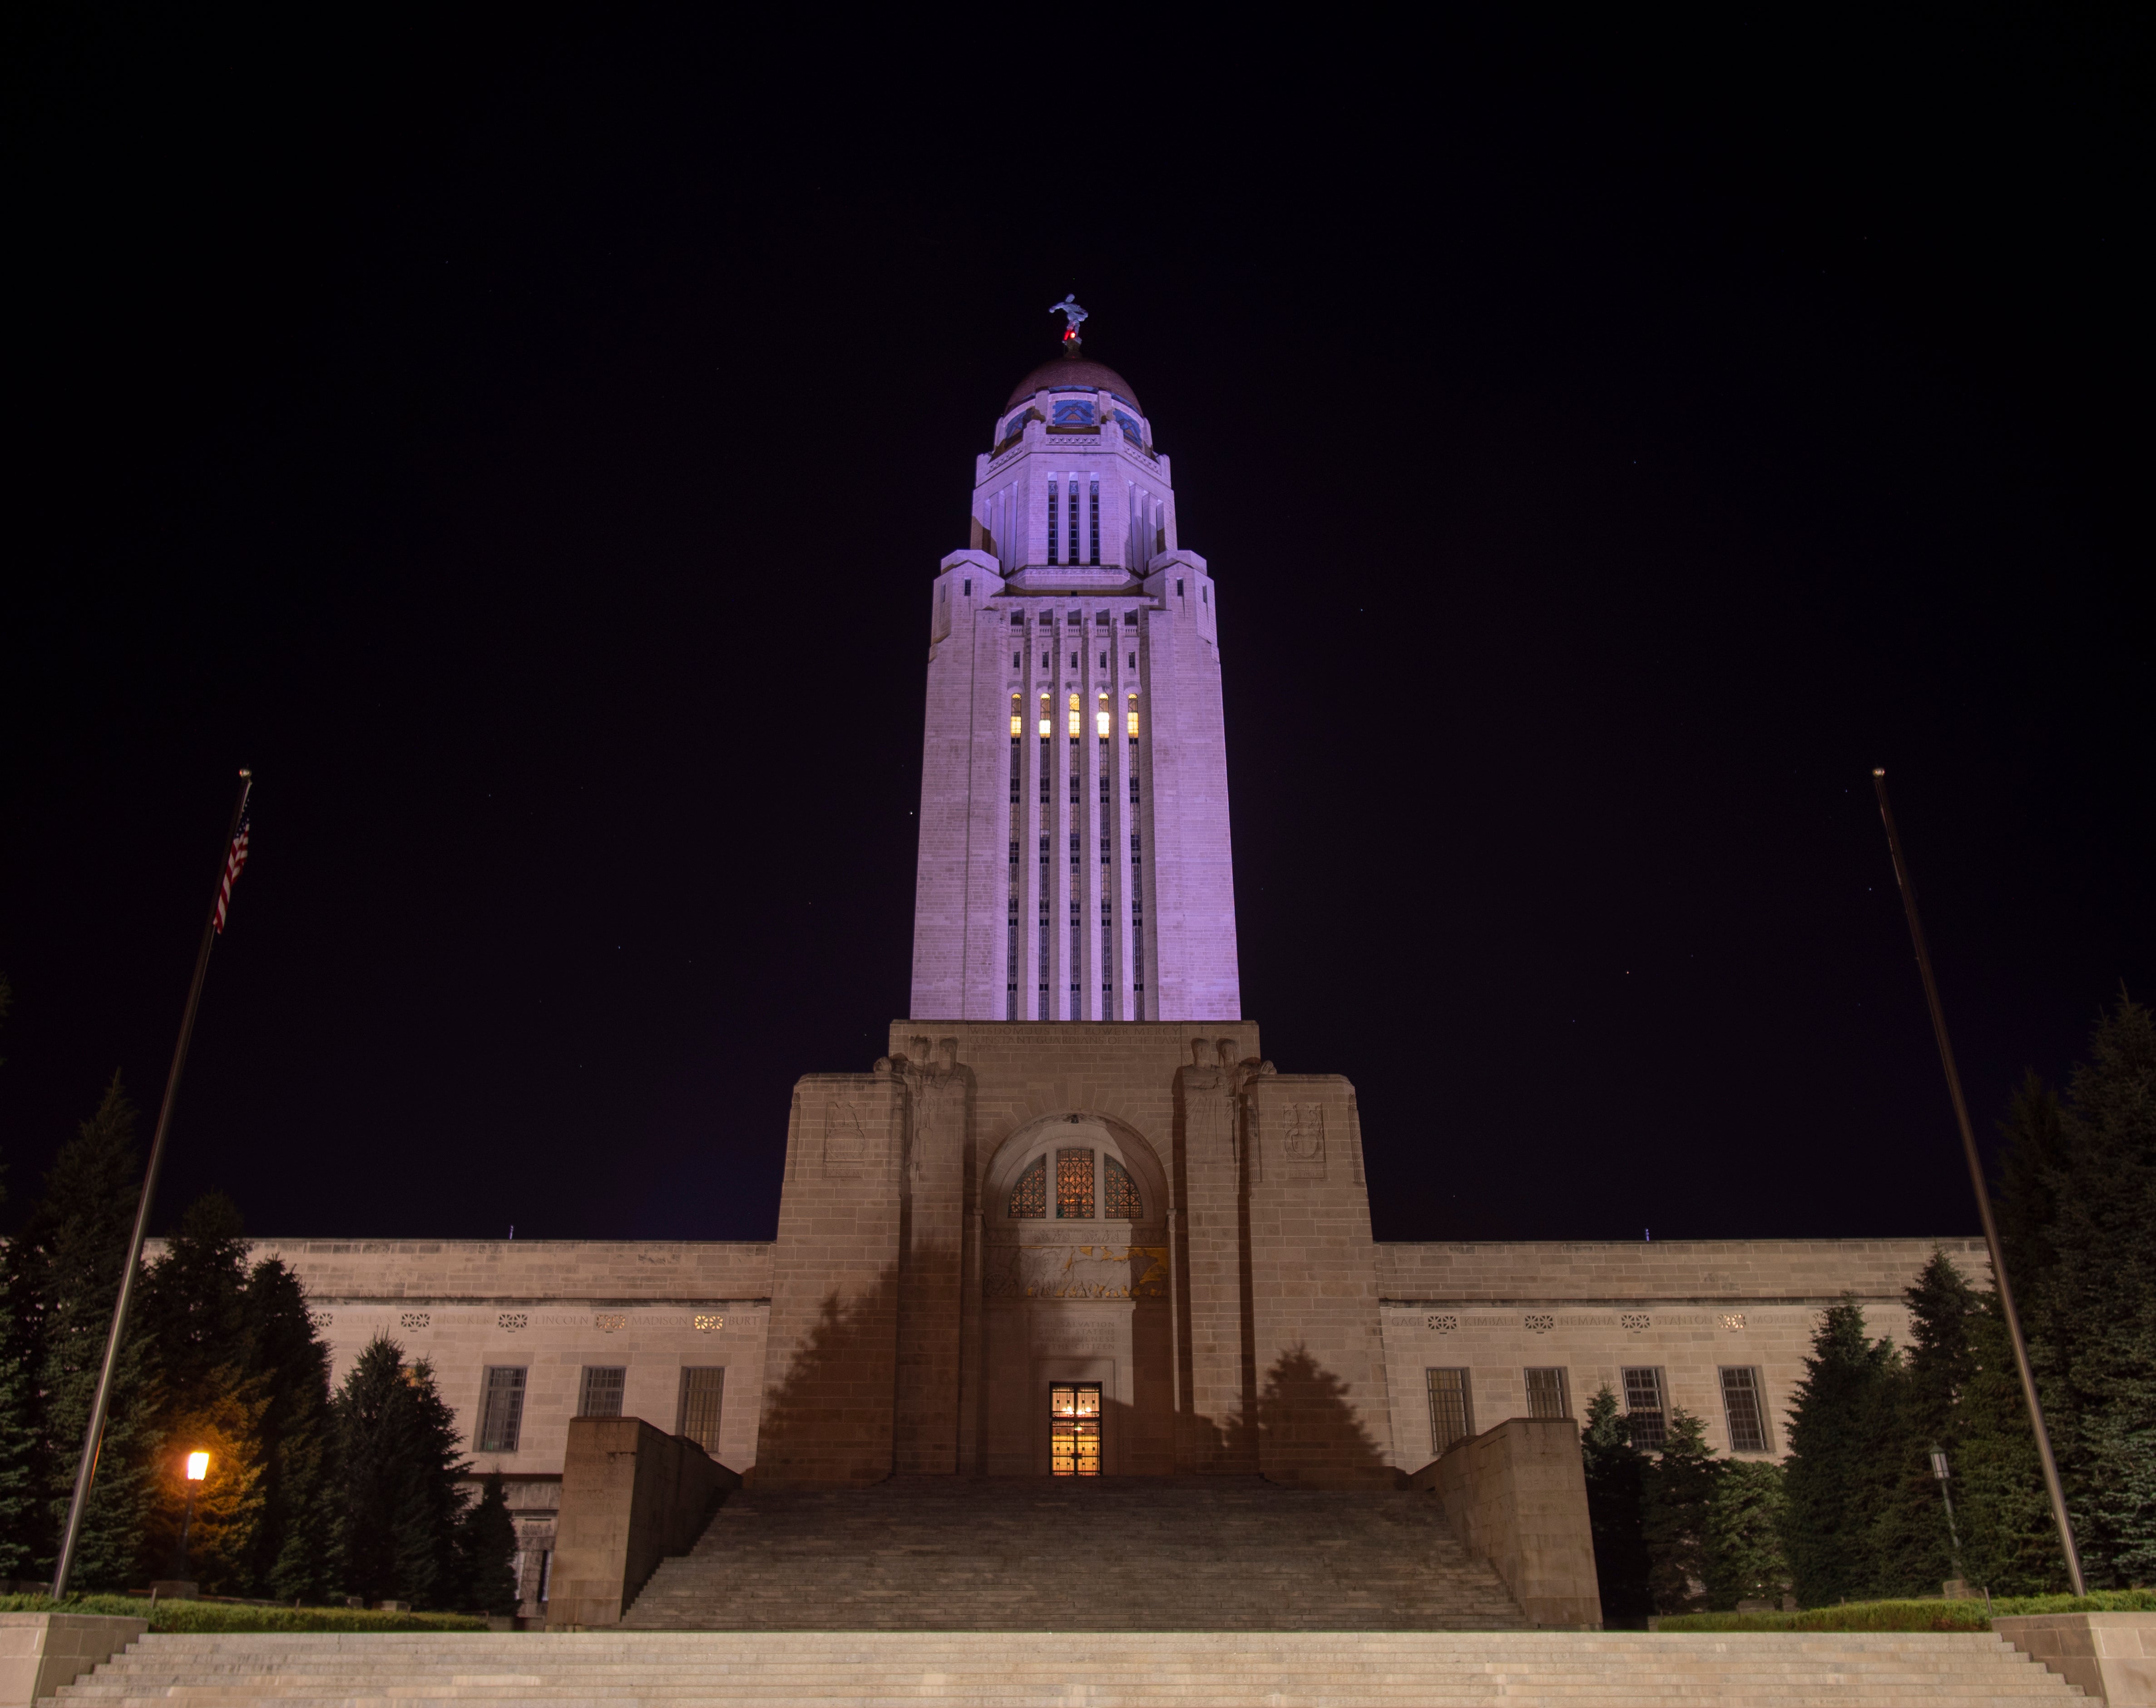 Capitol lit purple for Purple Heart Day in 2018